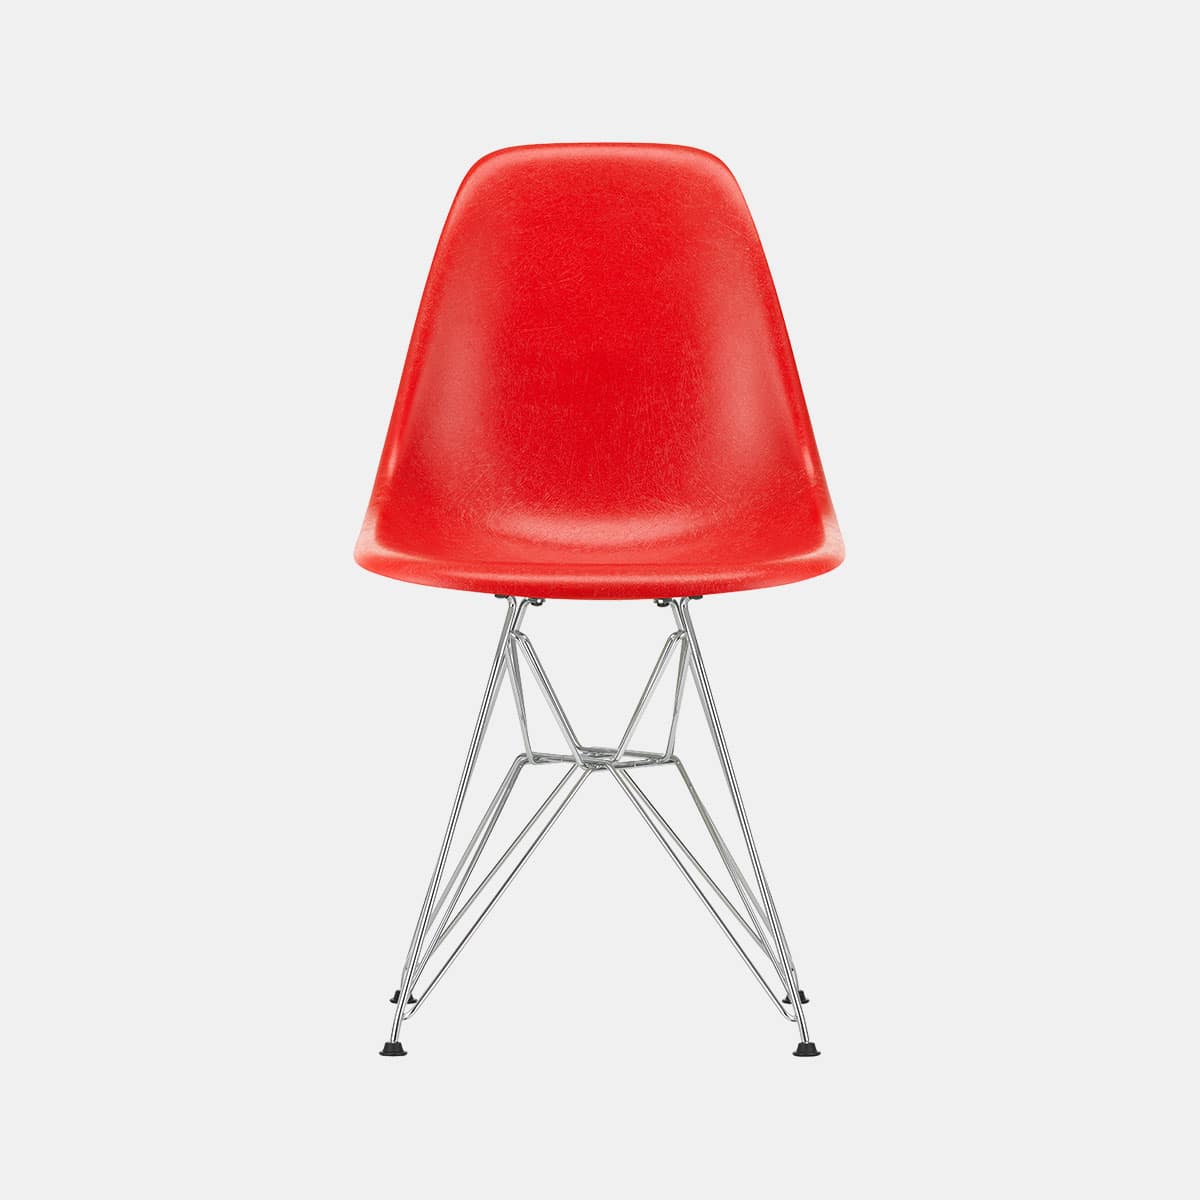 vitra-charles-ray-eames-fiberglass-side-chair-dsr-eames-classic-red-chroom-001shop